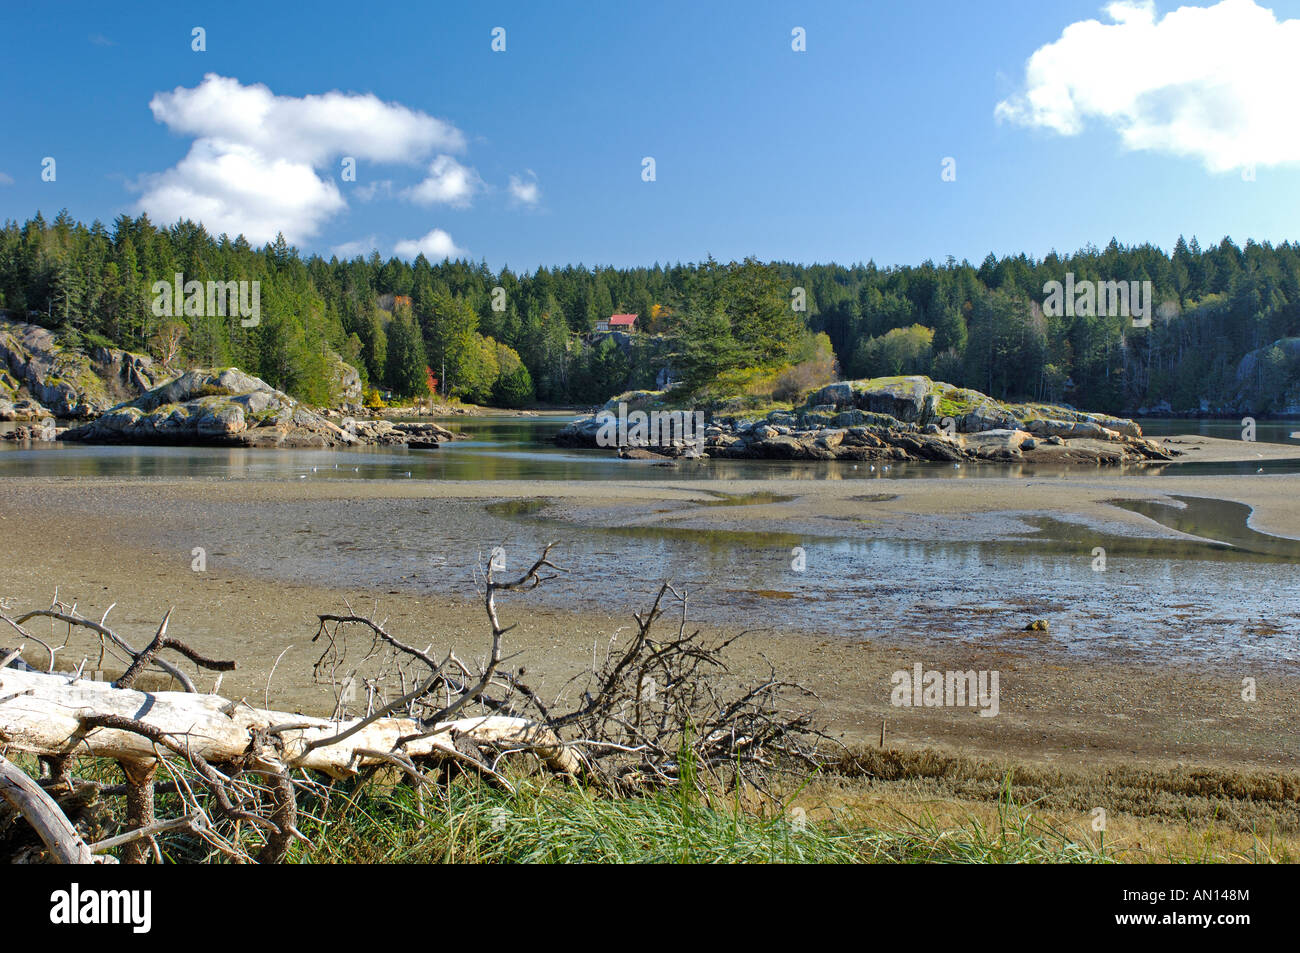 Squrriel Cove Salmon Creek Cortes Insel Vancouver Inseln. BC. Kanada.   BCX 0205. Stockfoto